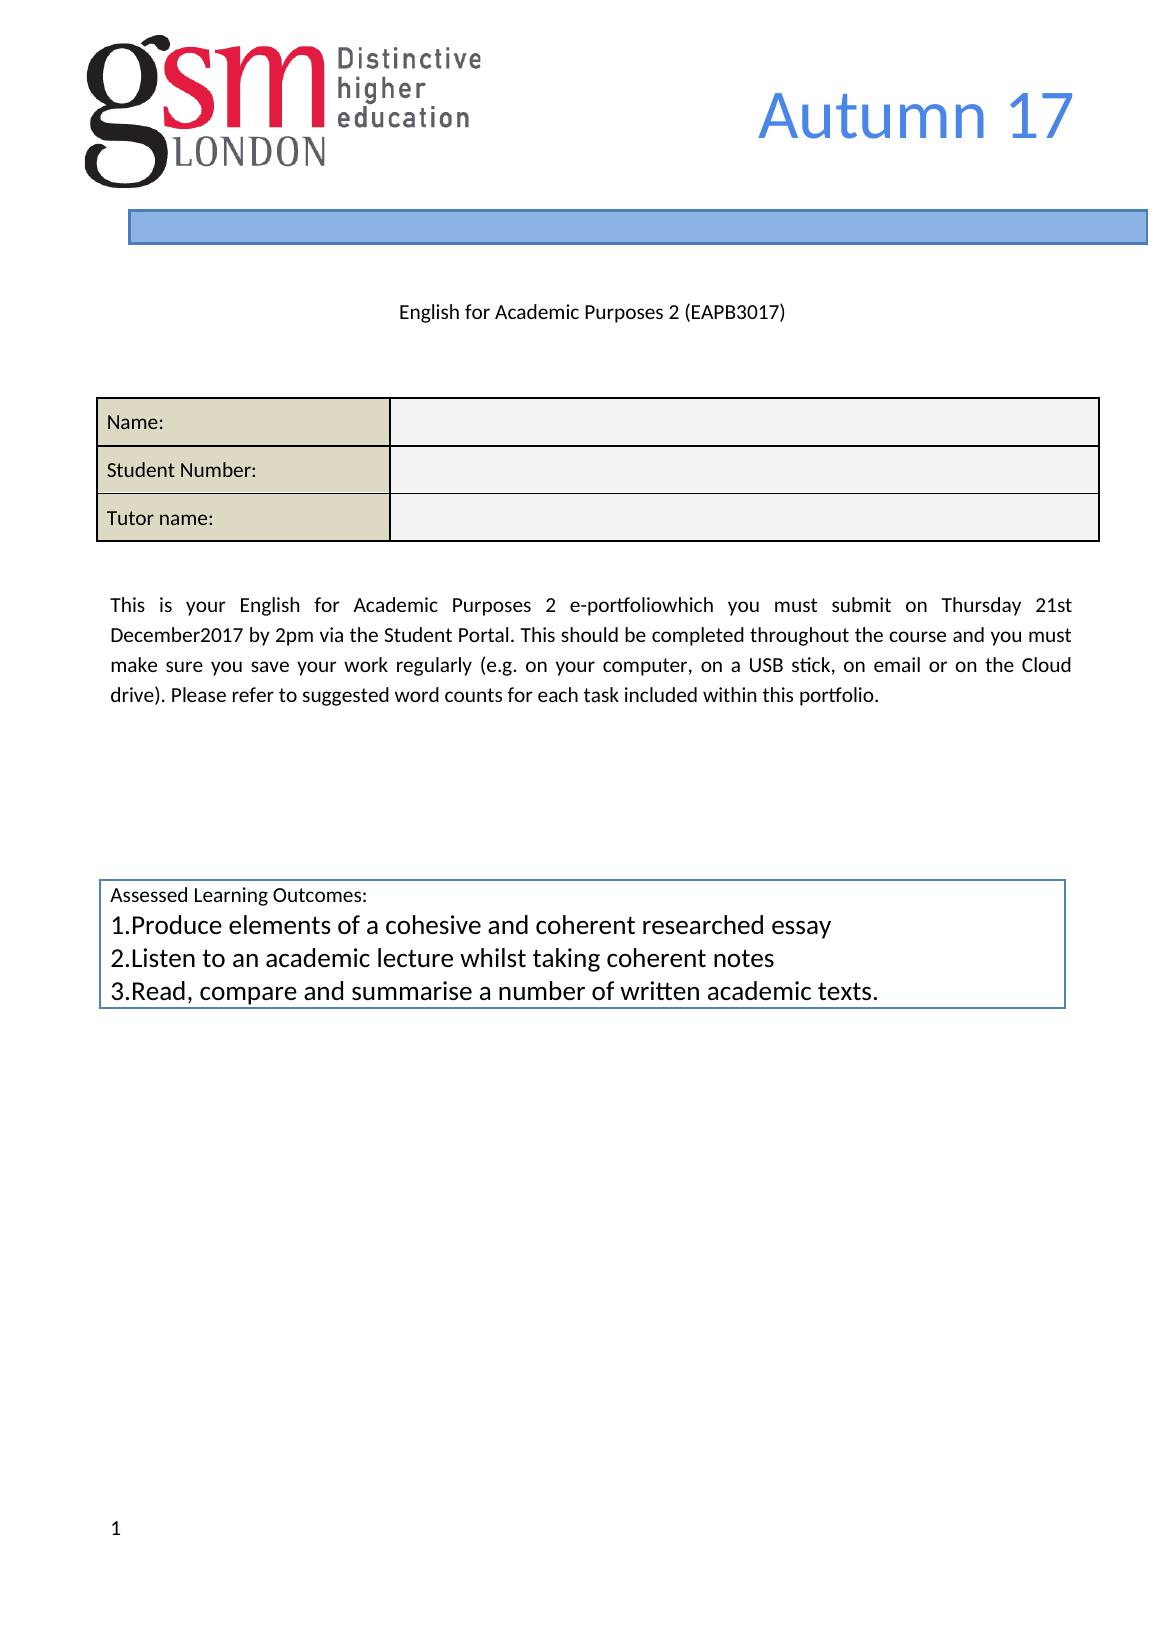 EAPB3017 English for Academic Purposes - (Doc)_1